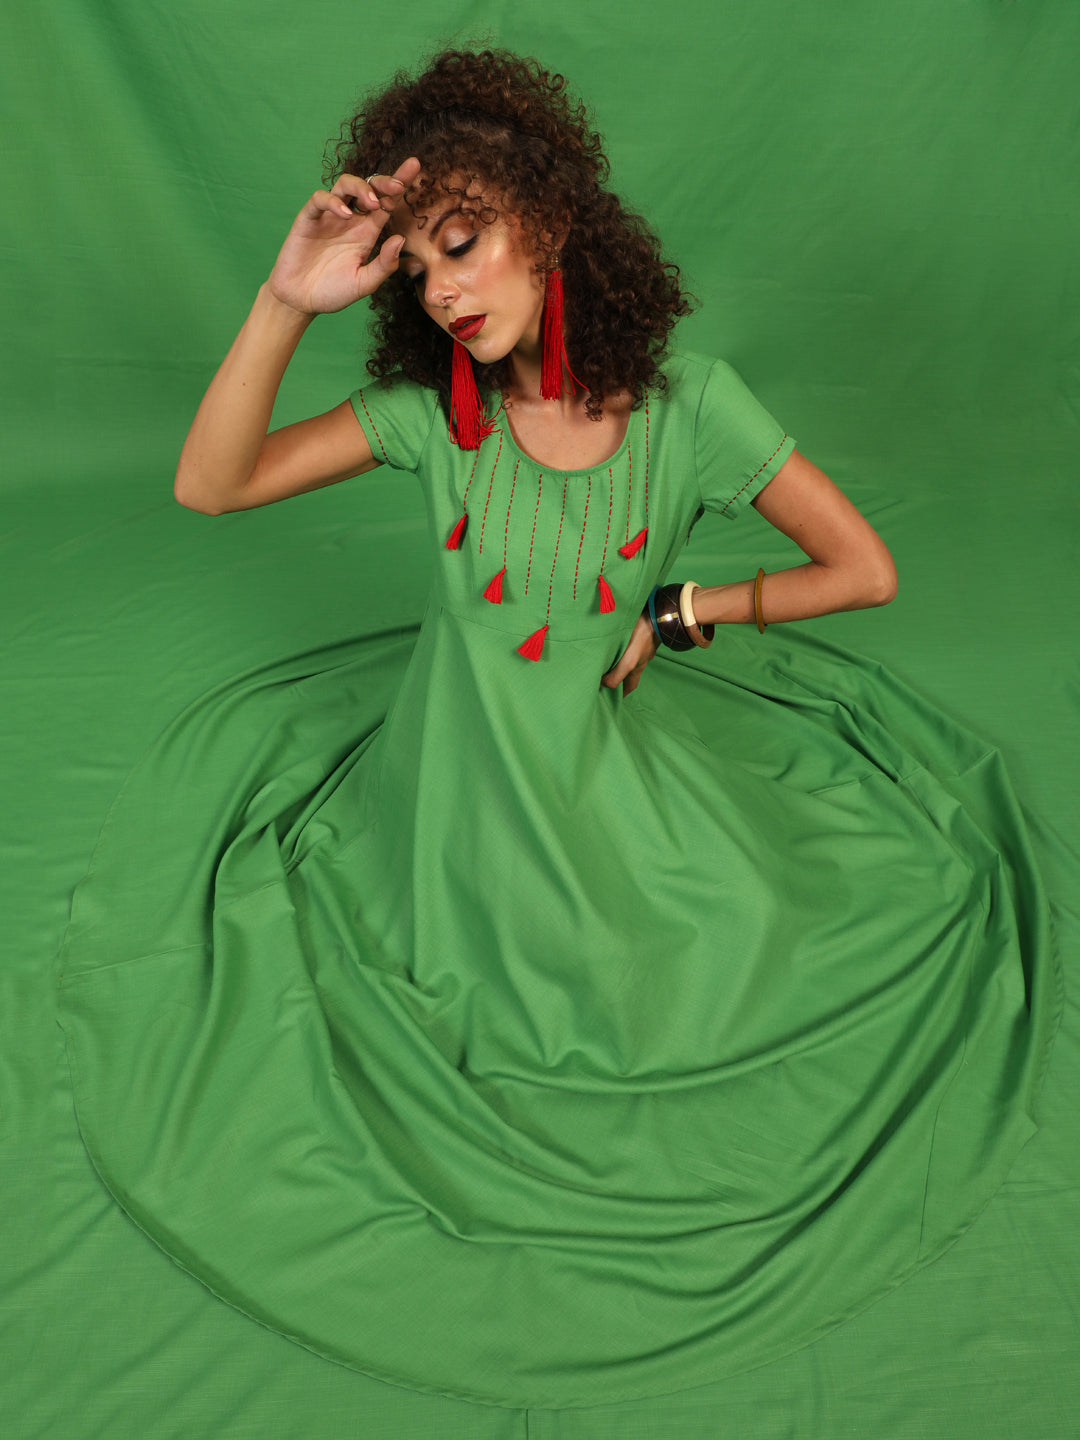 Green Maxi Dress With Thread Worked Yoke